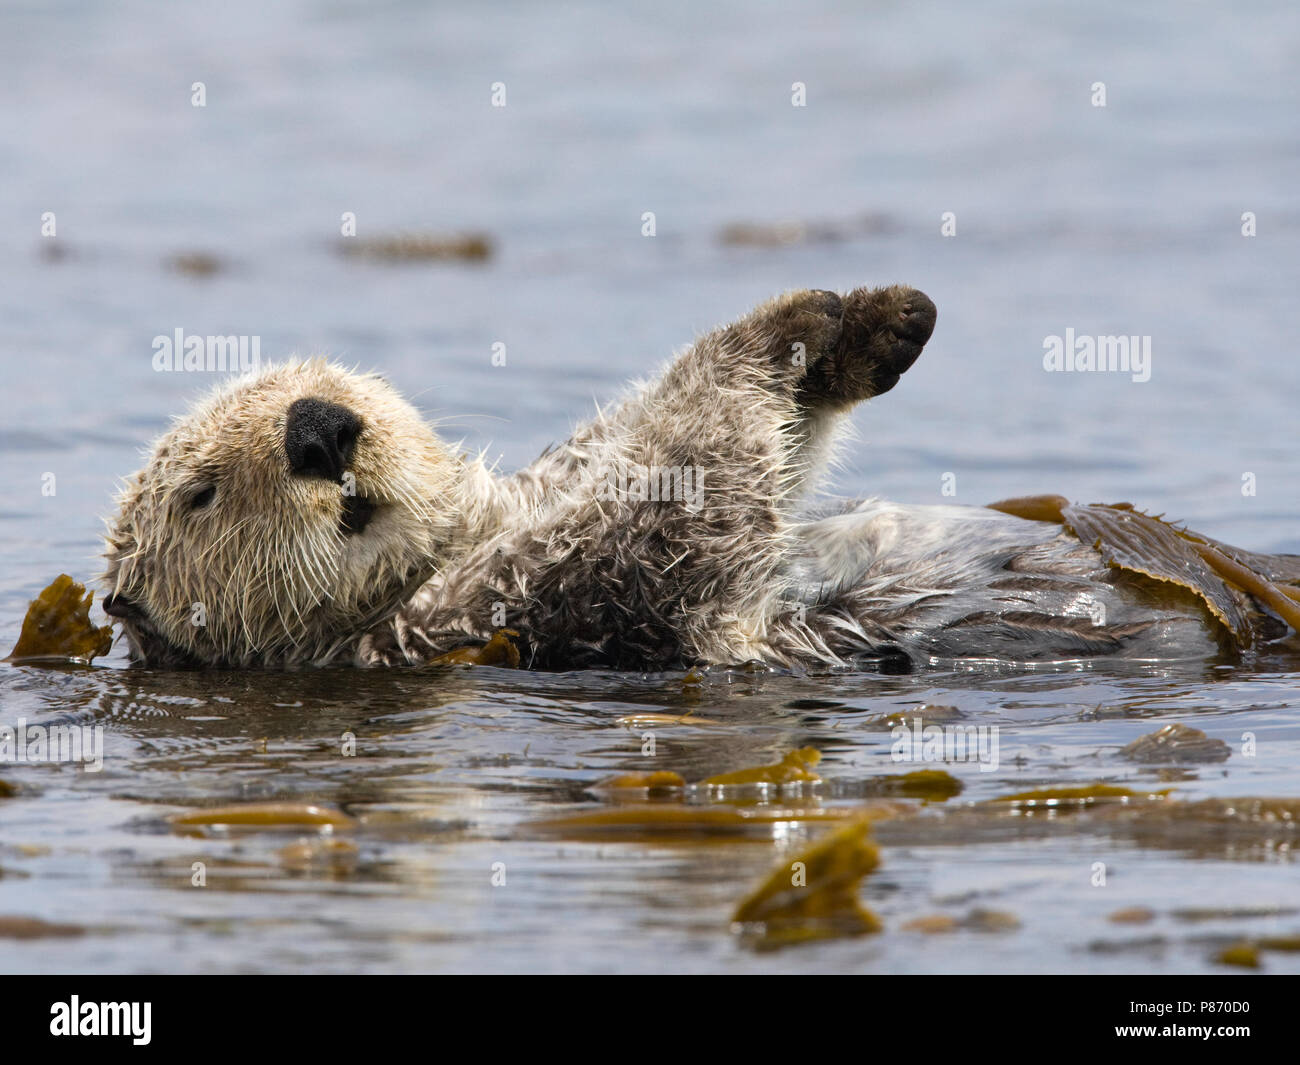 Zeeotterdrijvend in kelp Californie USA, Sea Otter floating in kelp California USA Stock Photo